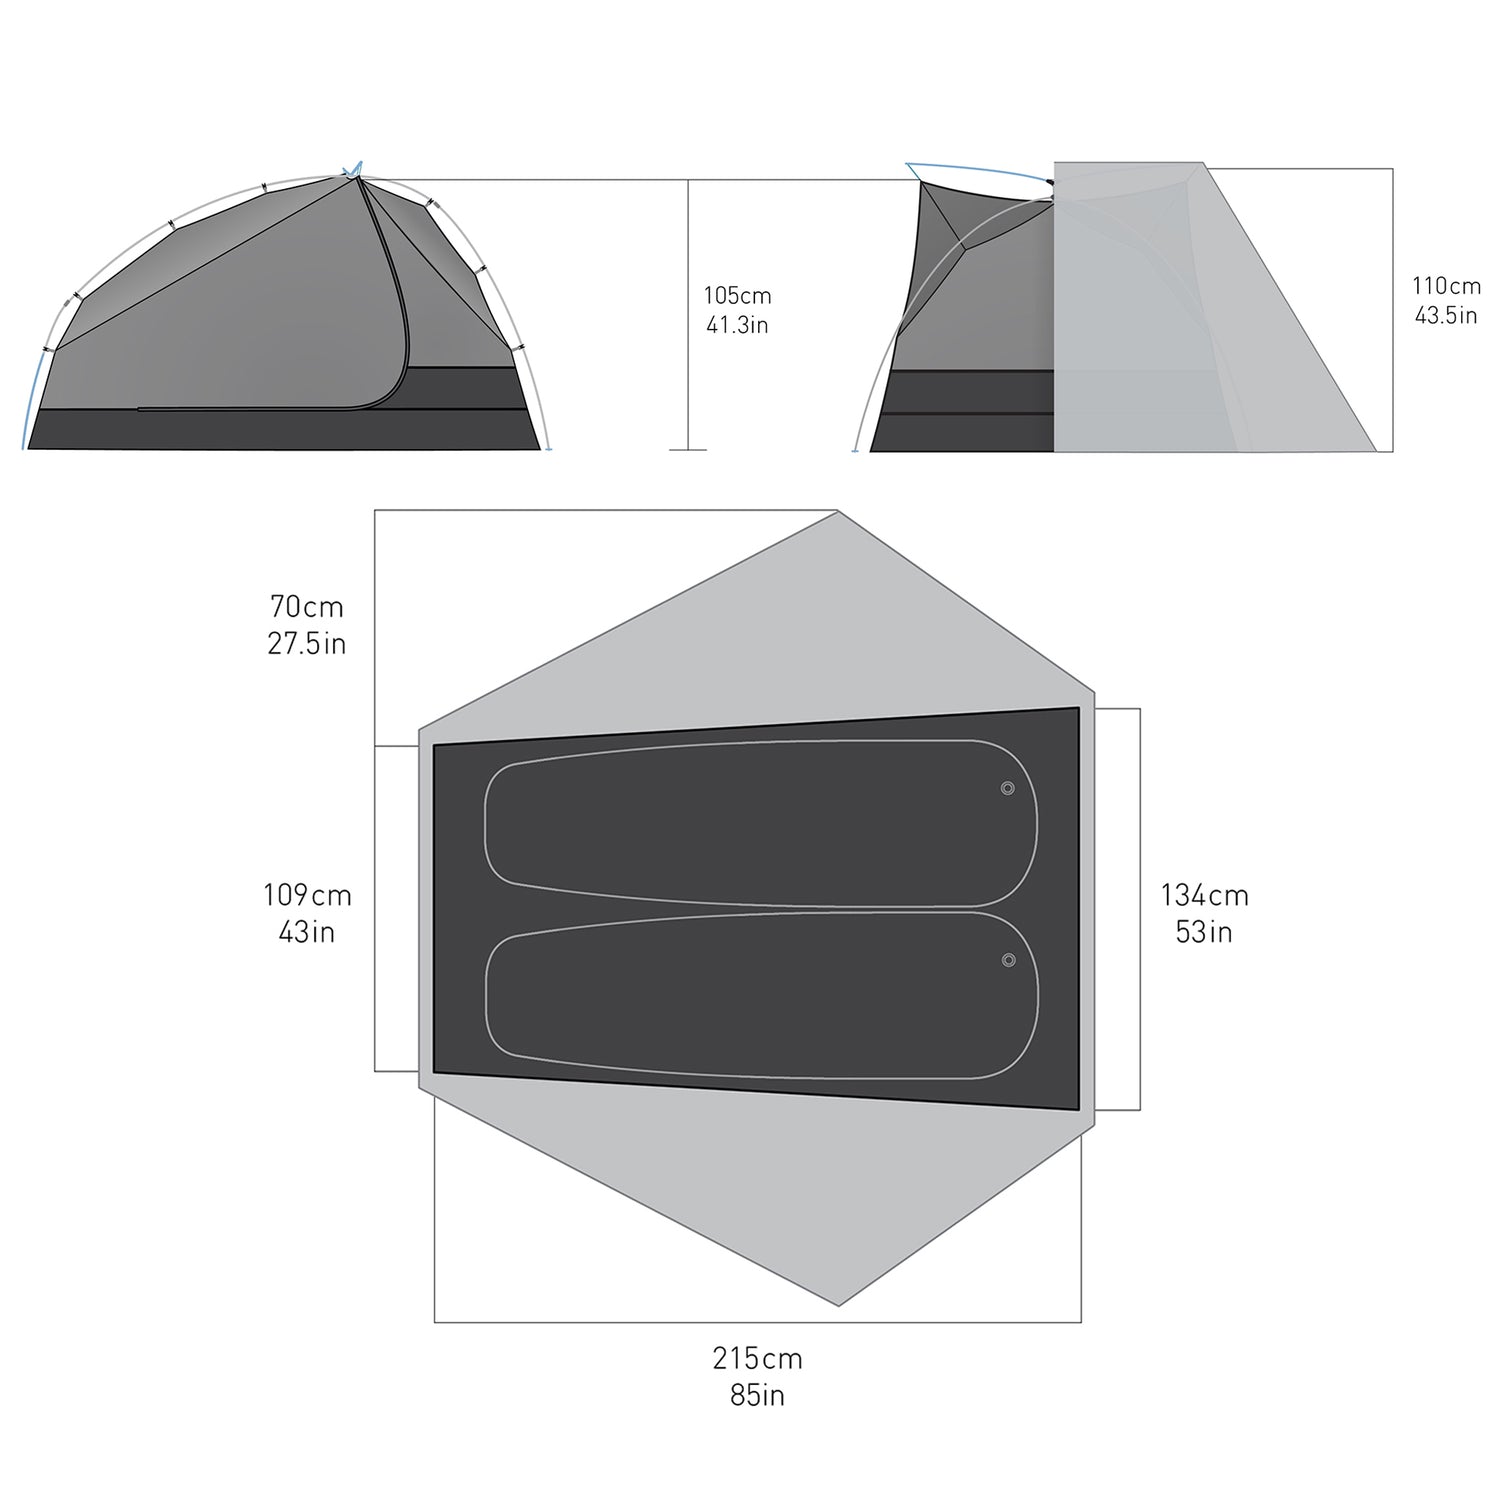 2 Person || Telos Freestanding Ultralight Tent